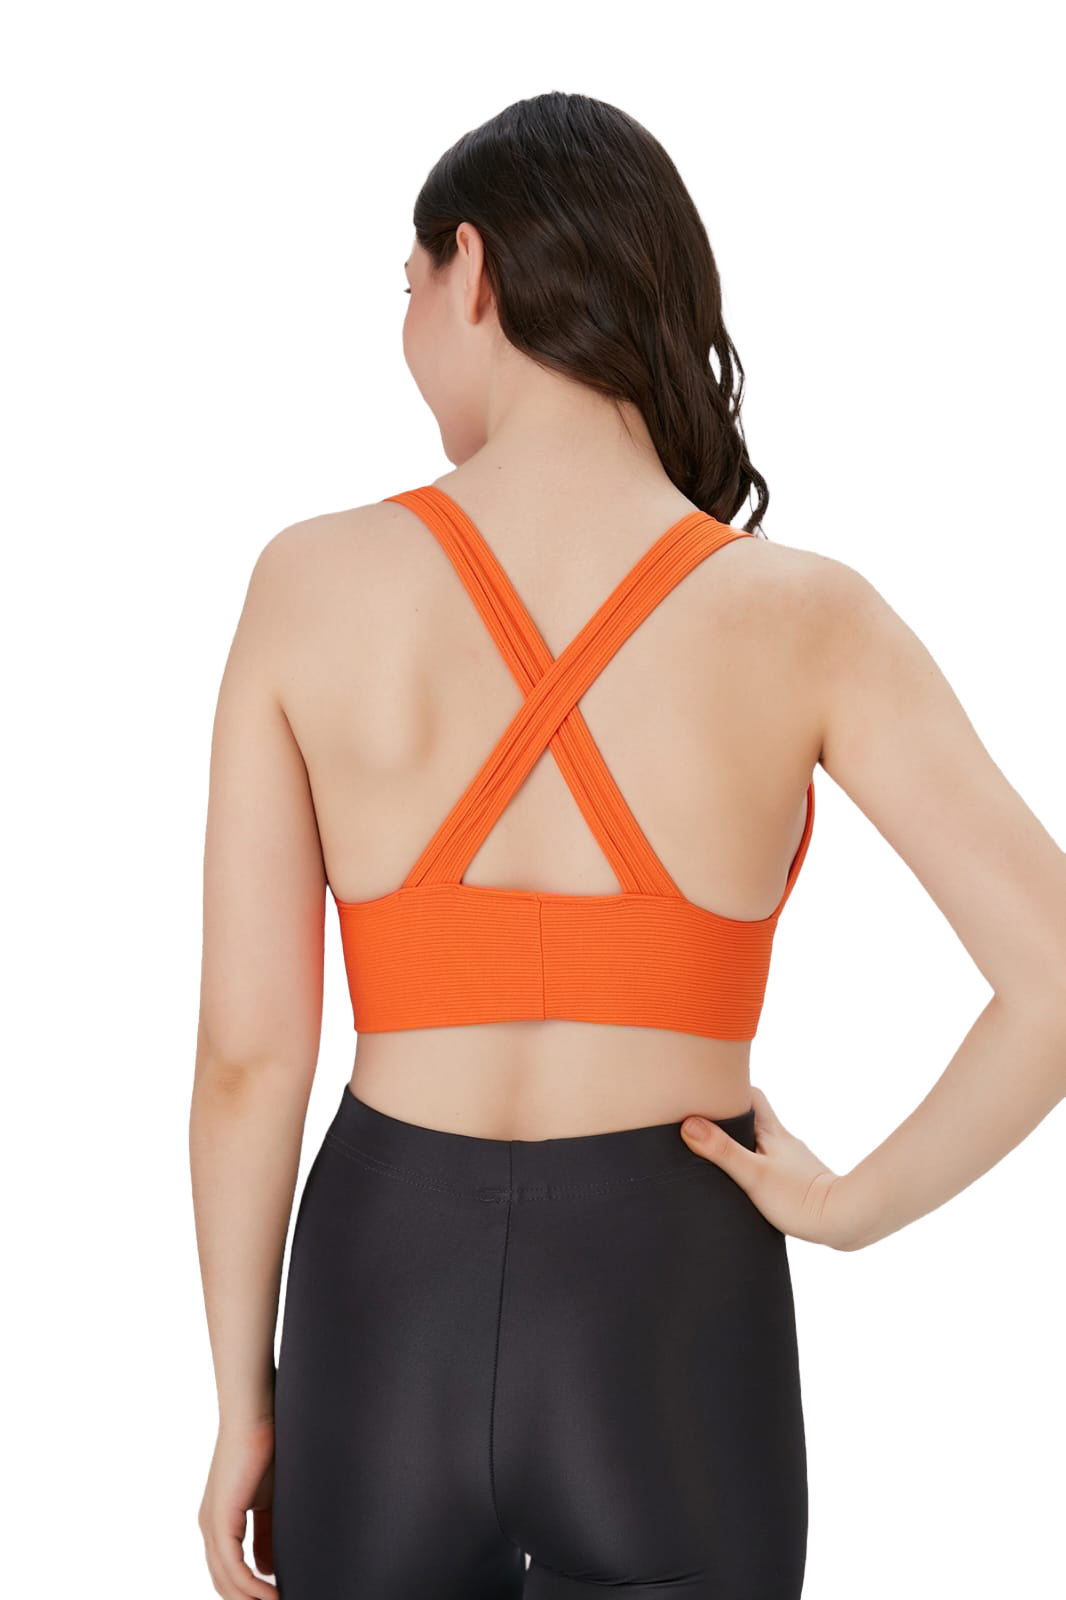 Ladies Padded Workout Wear, Comfortable Soft Plunge Neck Top - NEW ARRIVALS! - Wear Sierra